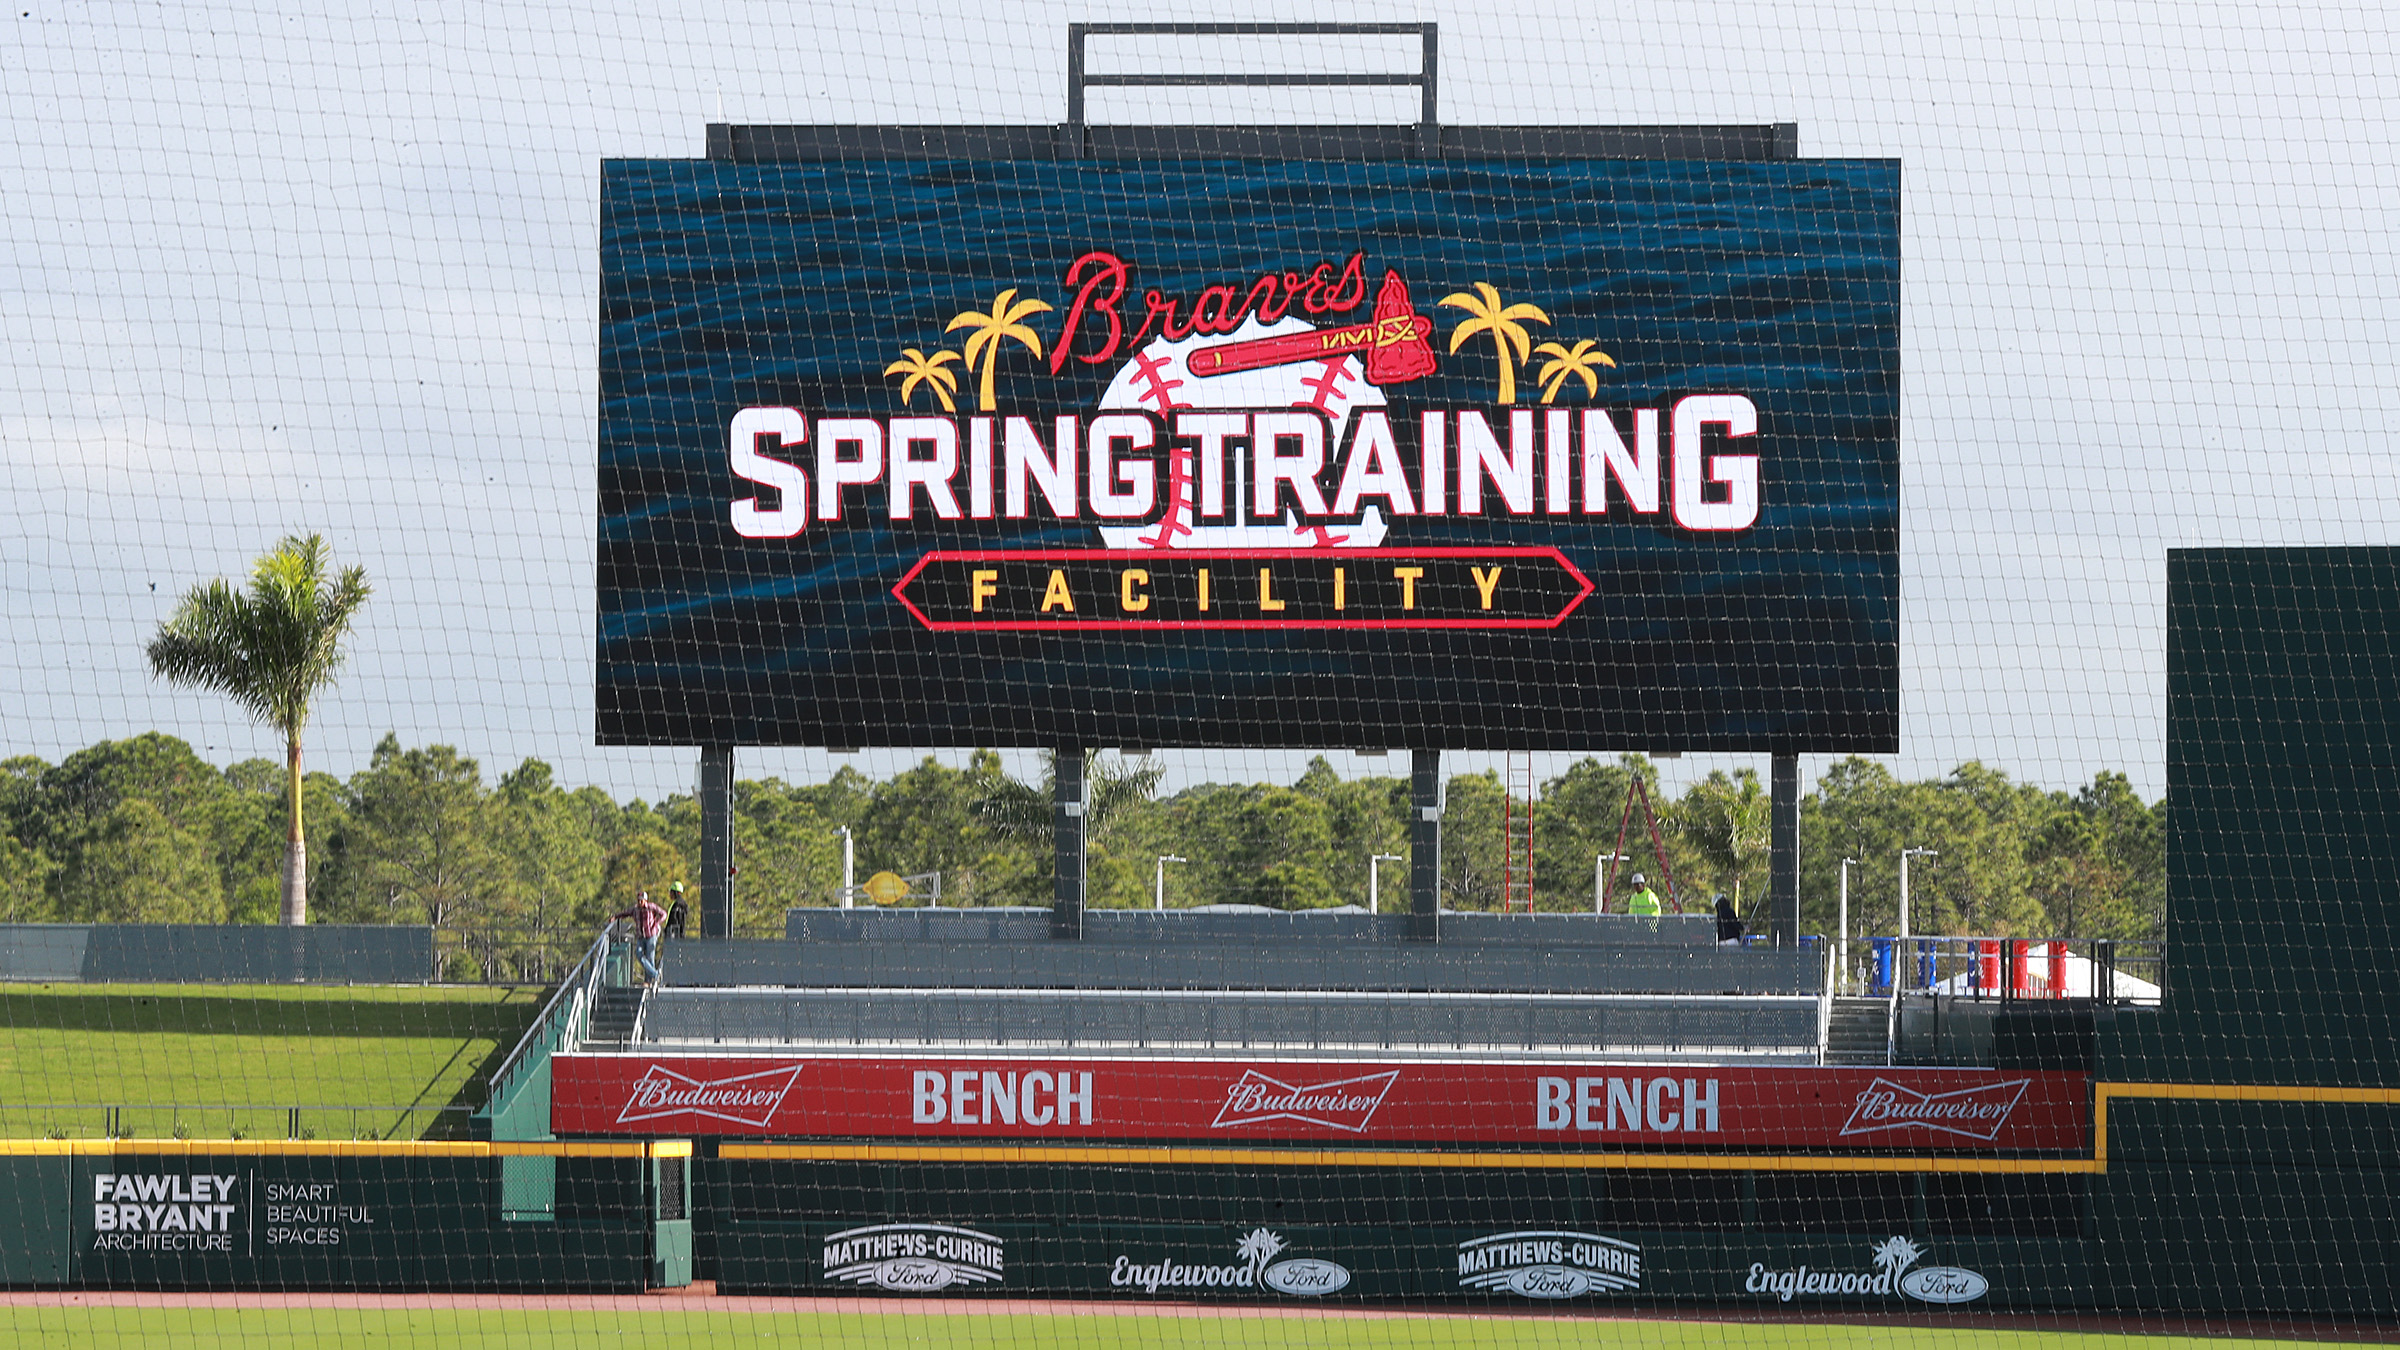 Atlanta Braves 2020 spring training schedule